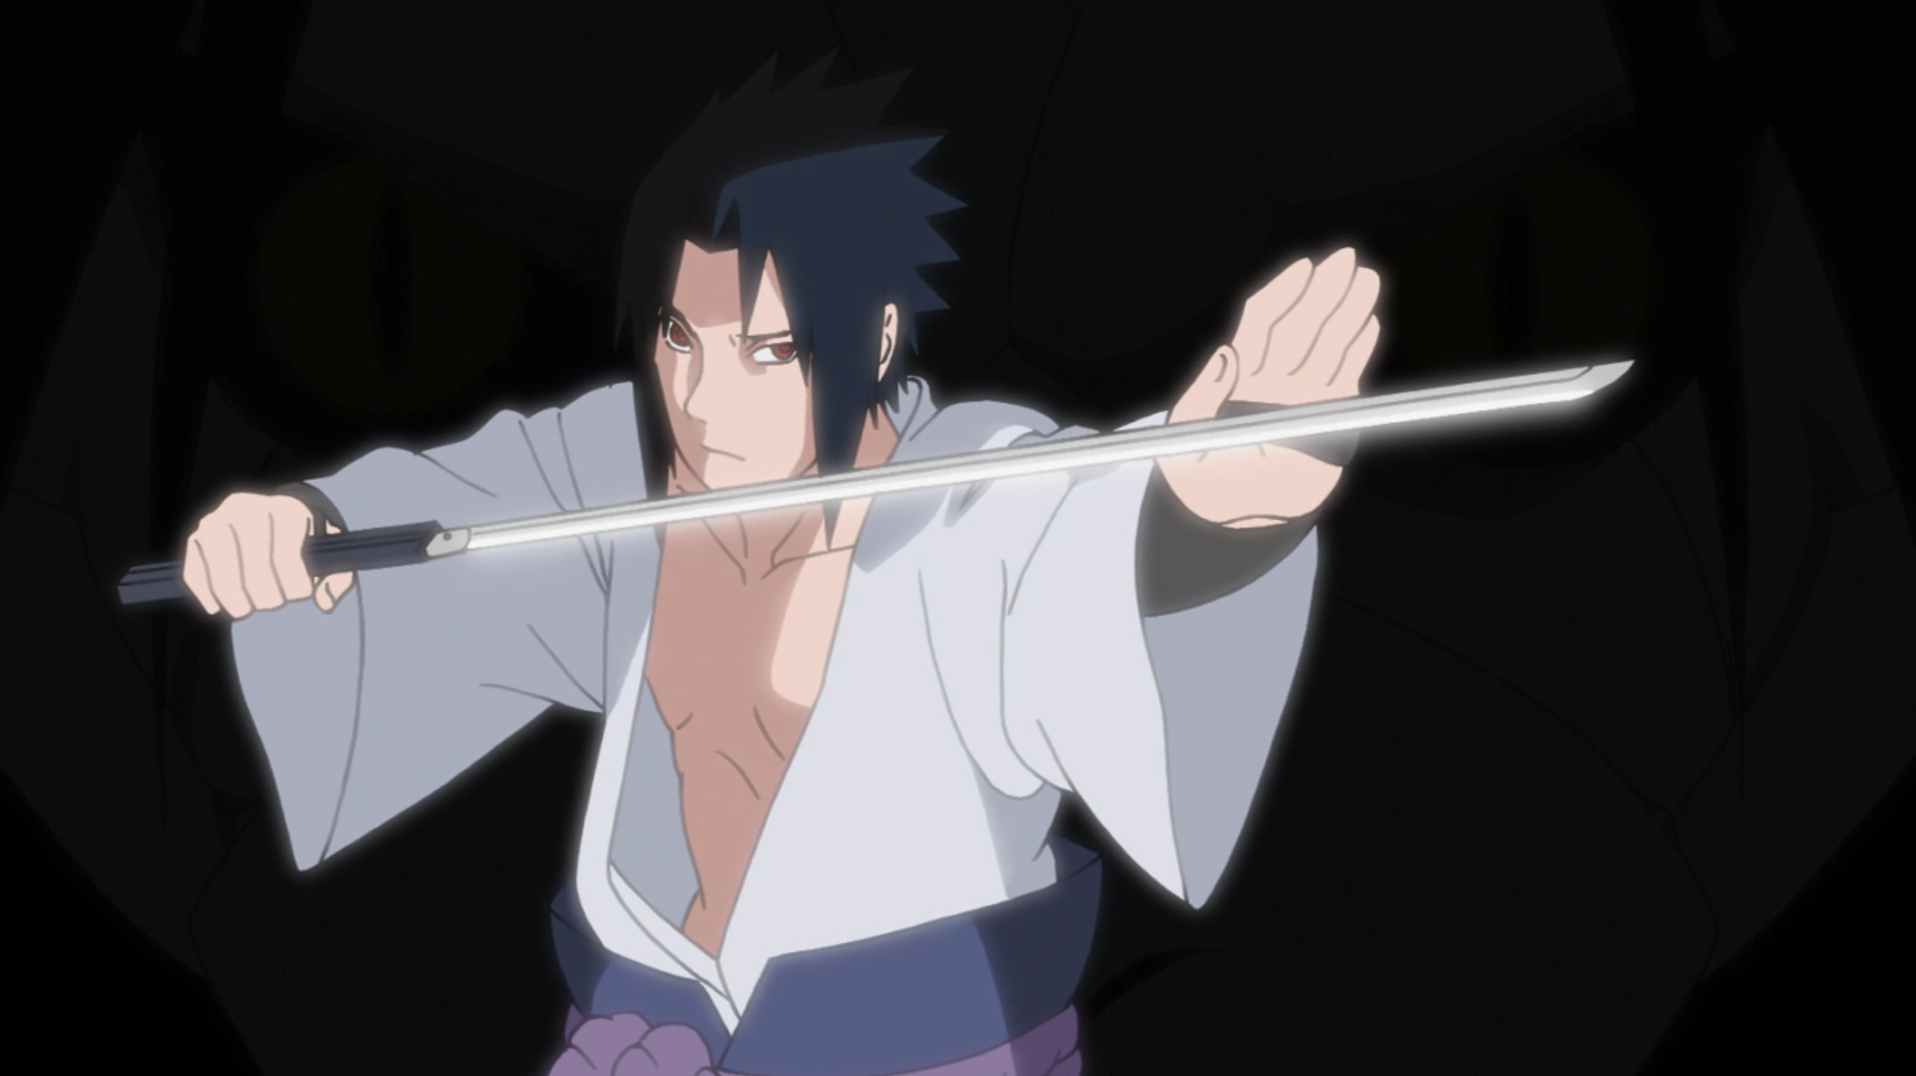 sasuke sword black